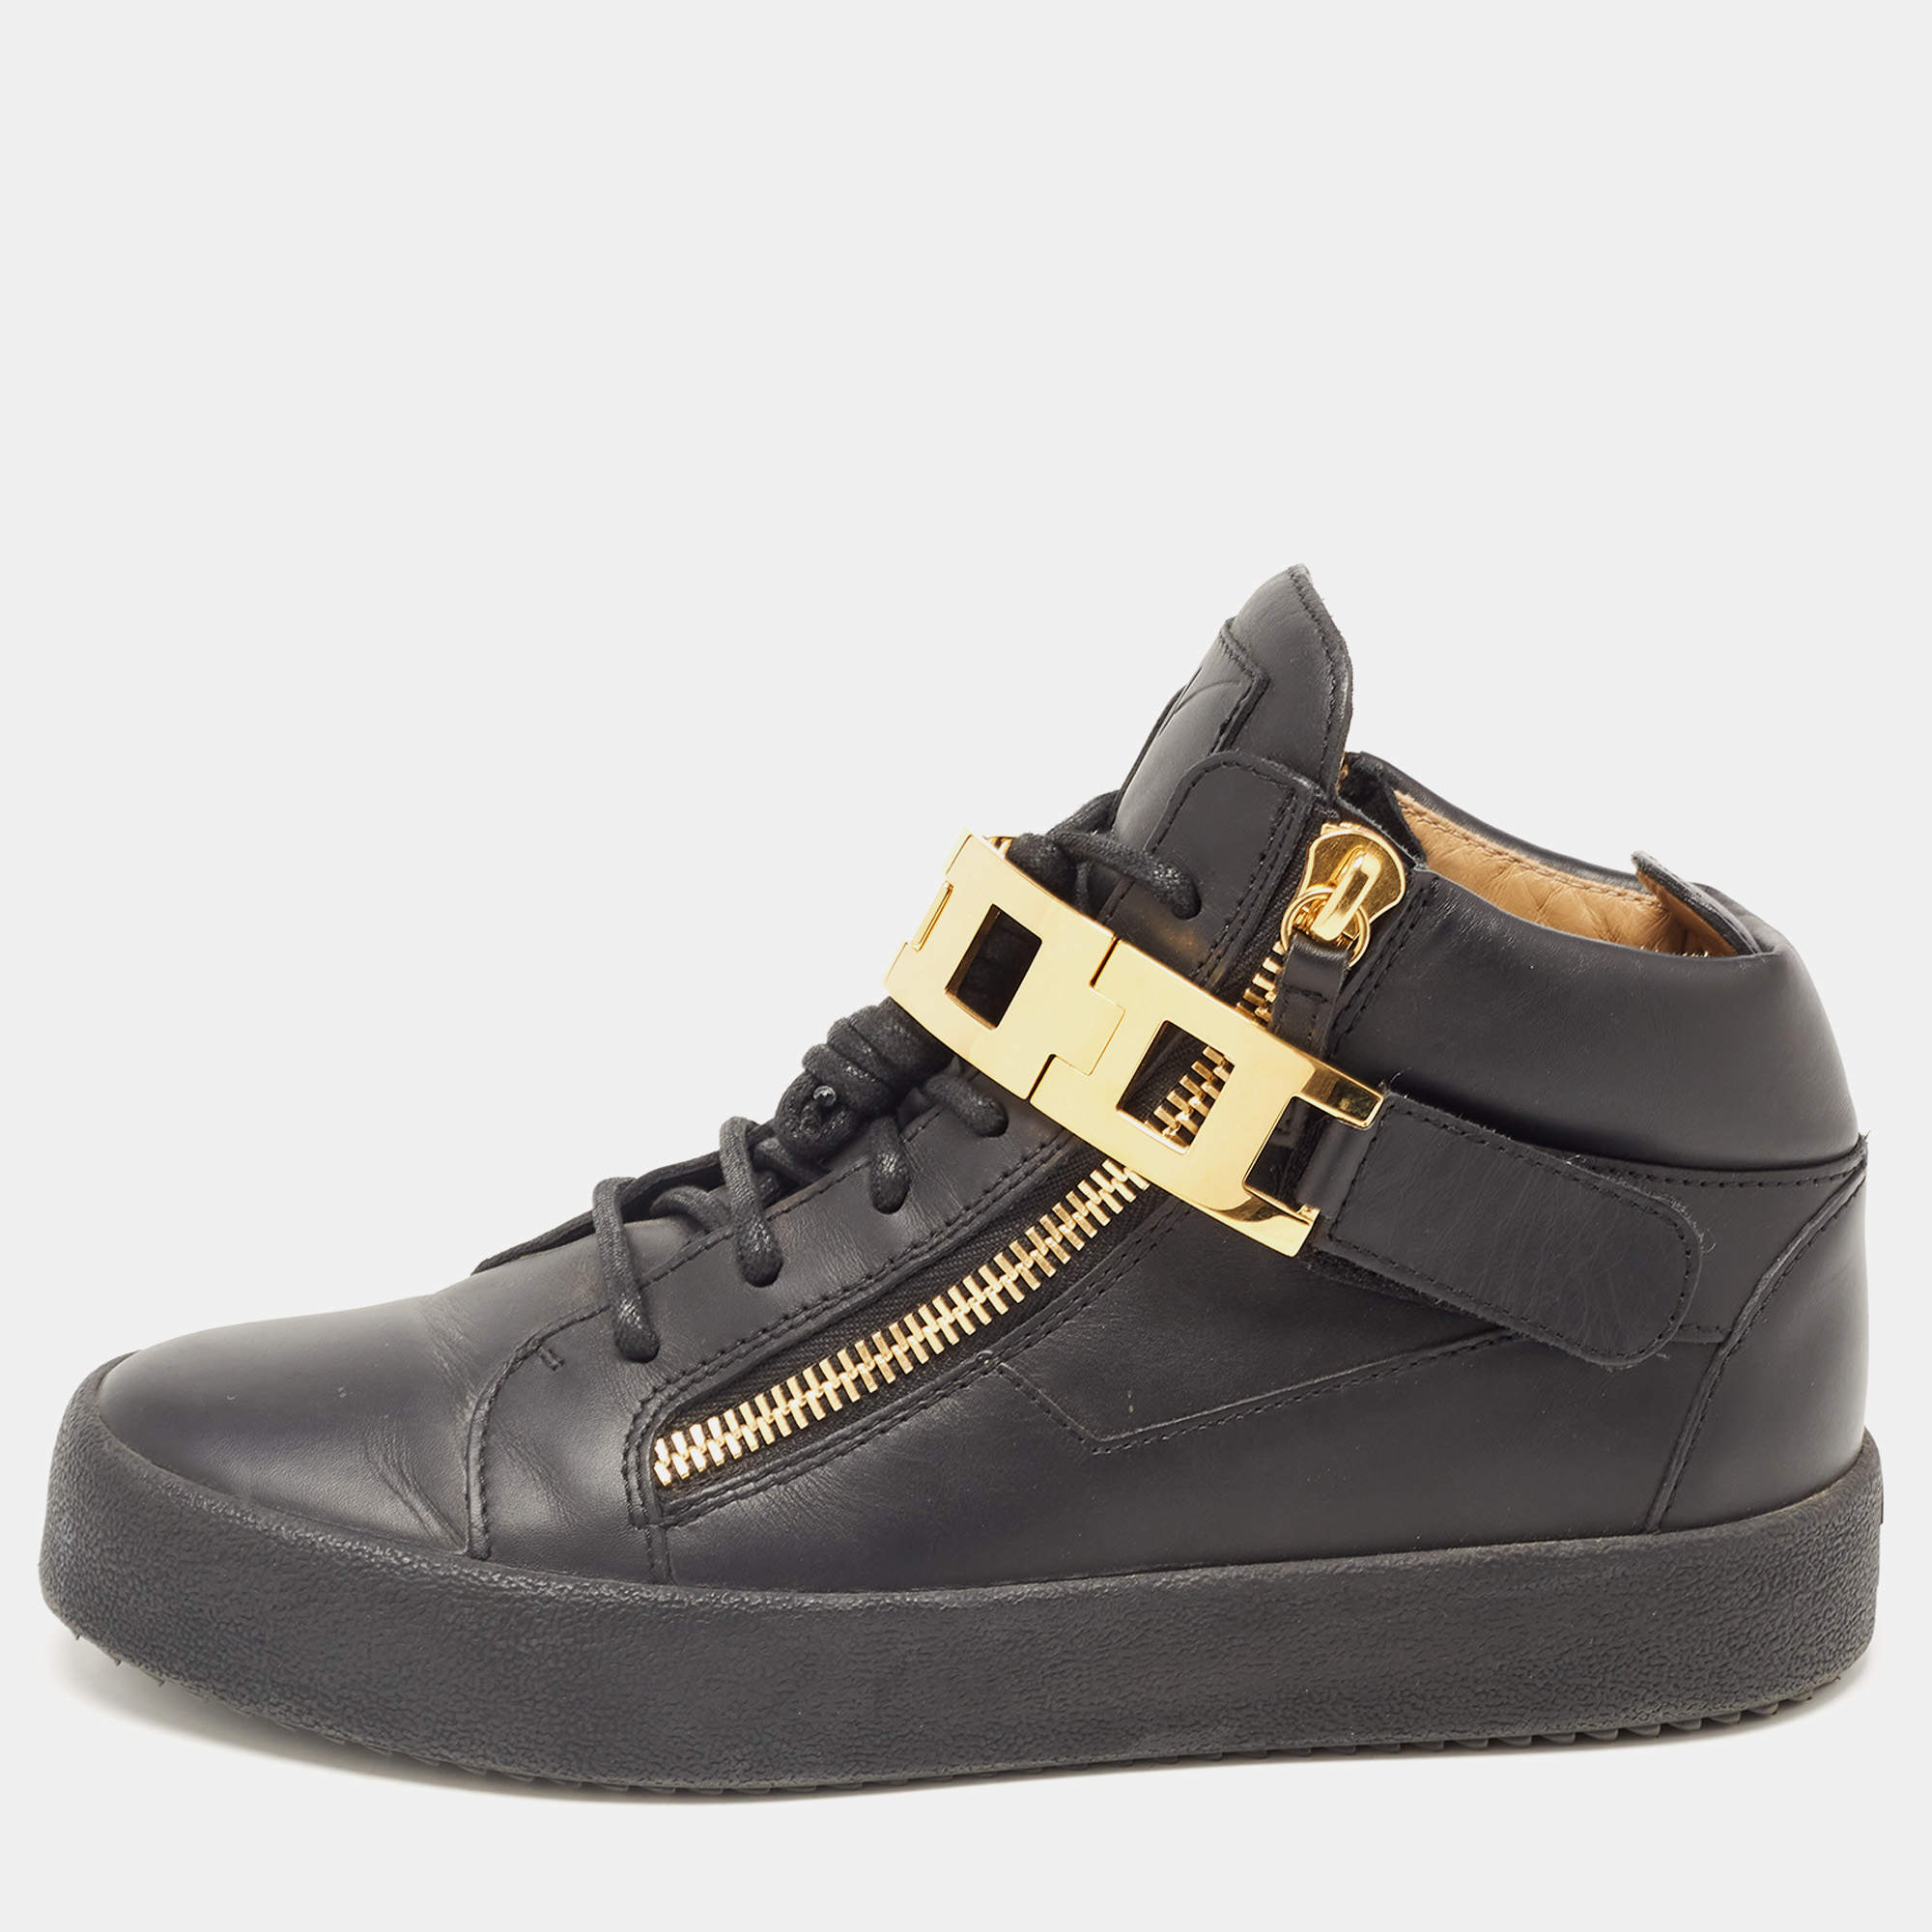 Giuseppe Zanotti Black Leather High Top Sneakers Size Giuseppe Zanotti |